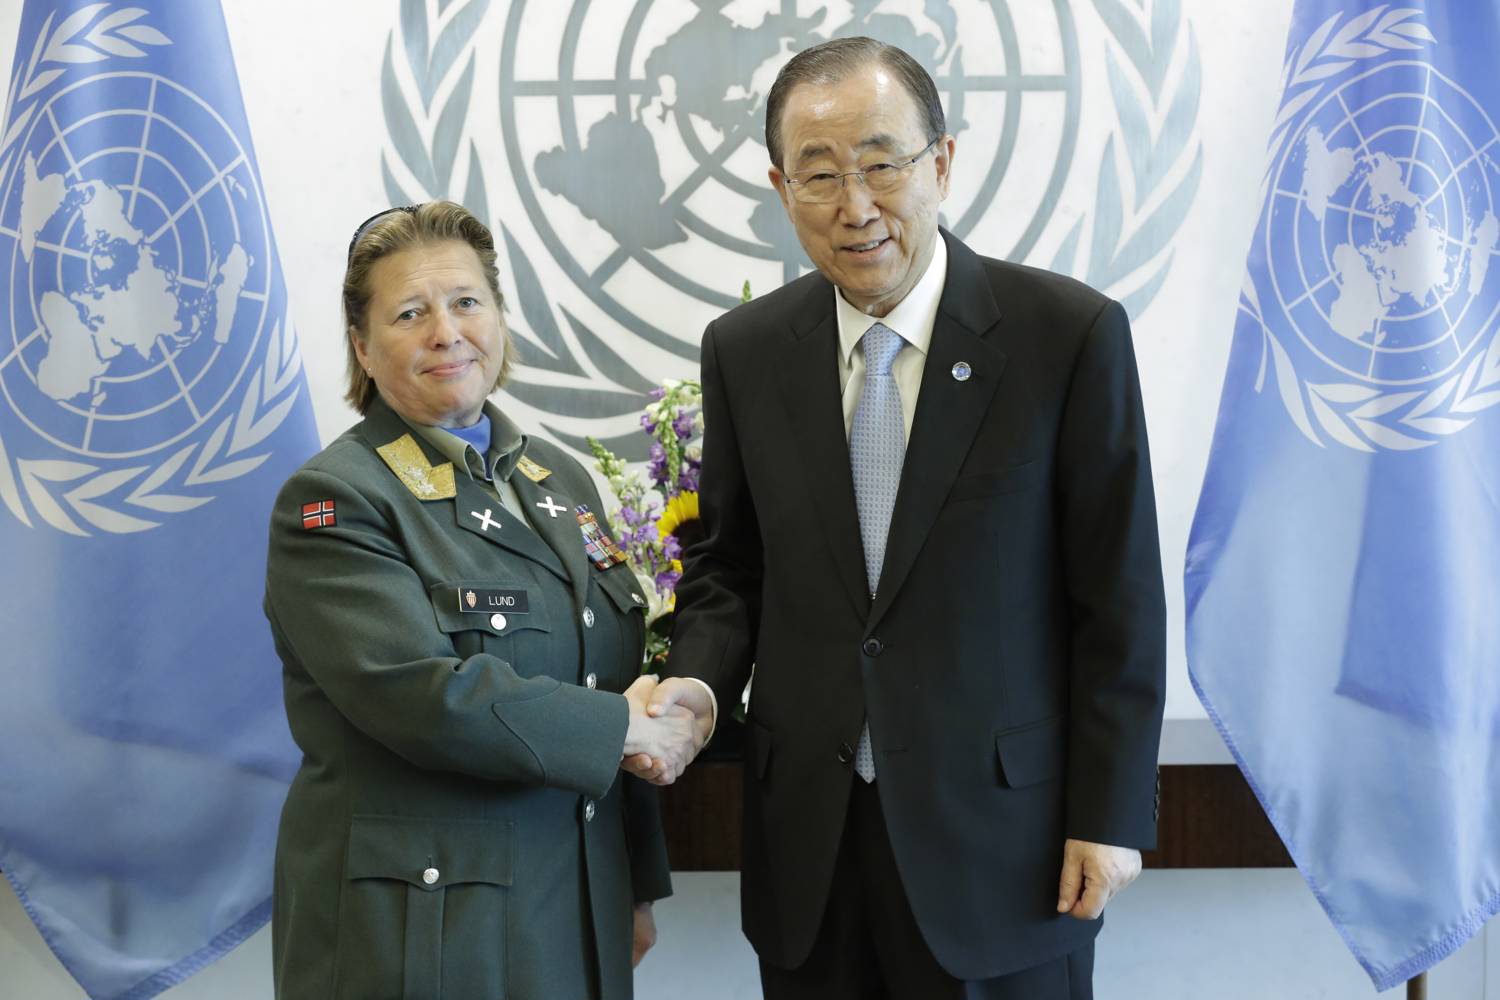 Secretary-General Ban Ki-moon (right) with Major General Kristin Lund of Norway in 2014. UN Photo / Mark Garten